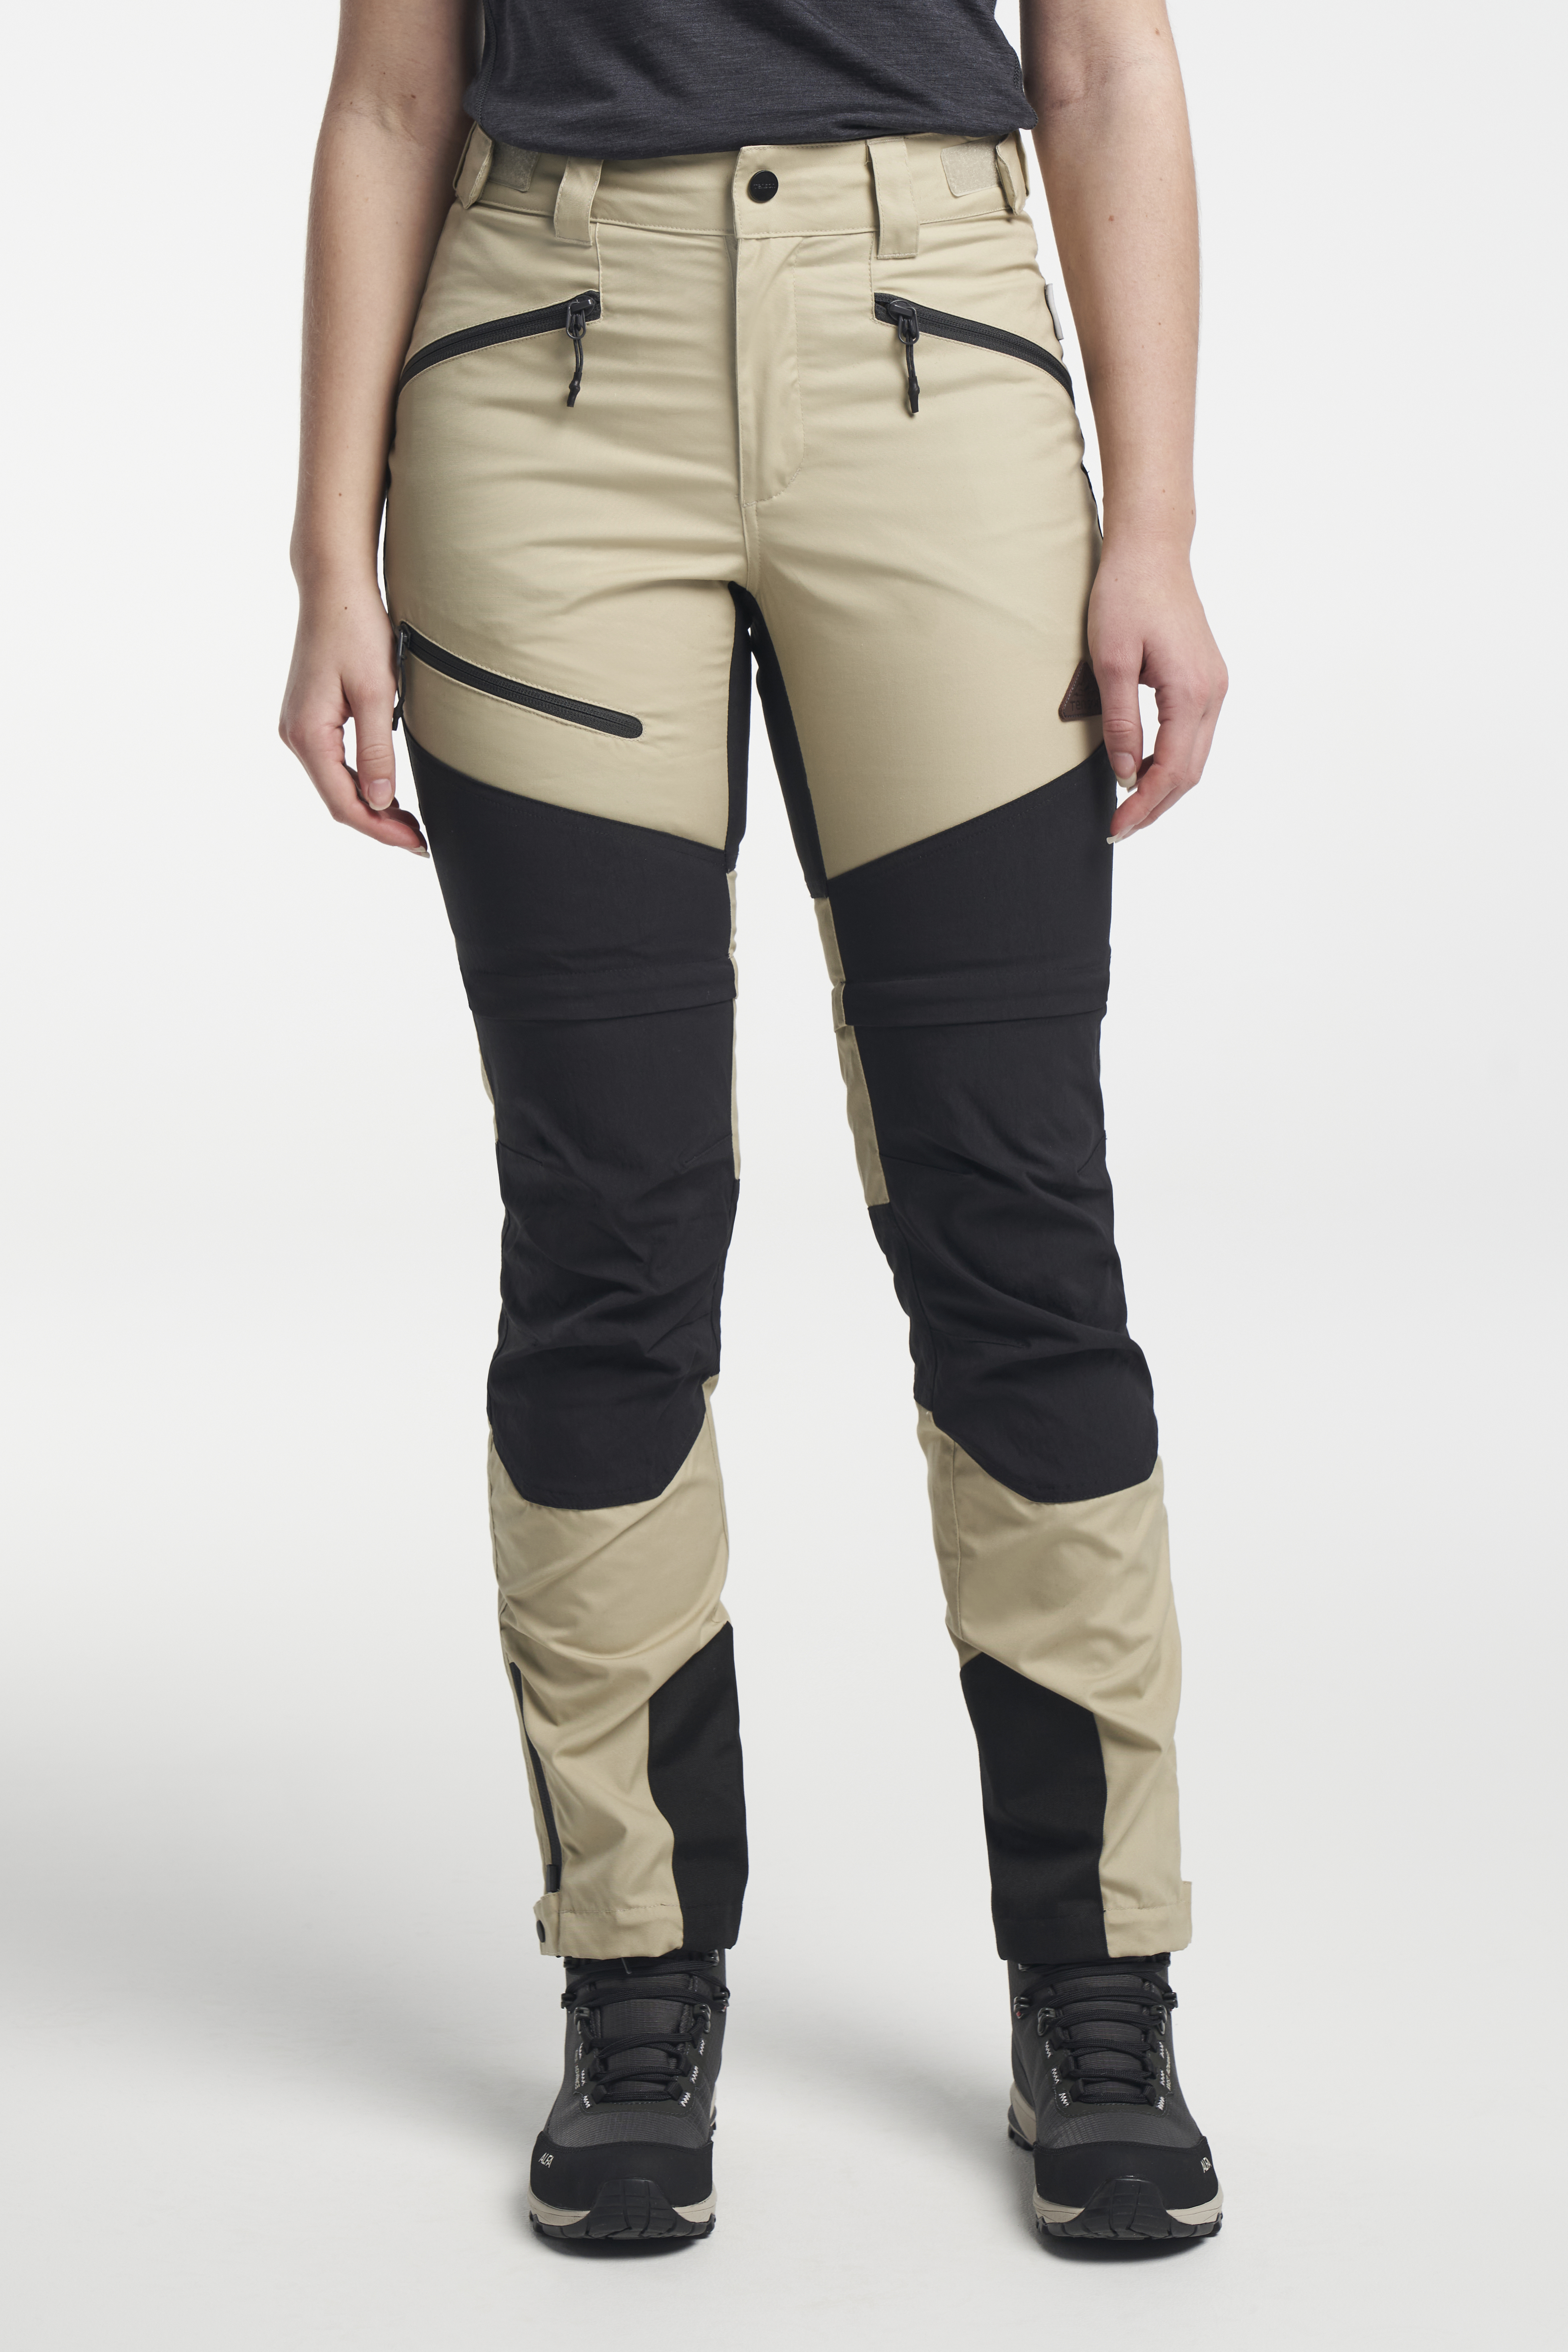 The North Face Hiking Pants Convertible Zip Off Shorts Khaki Size 12 | eBay